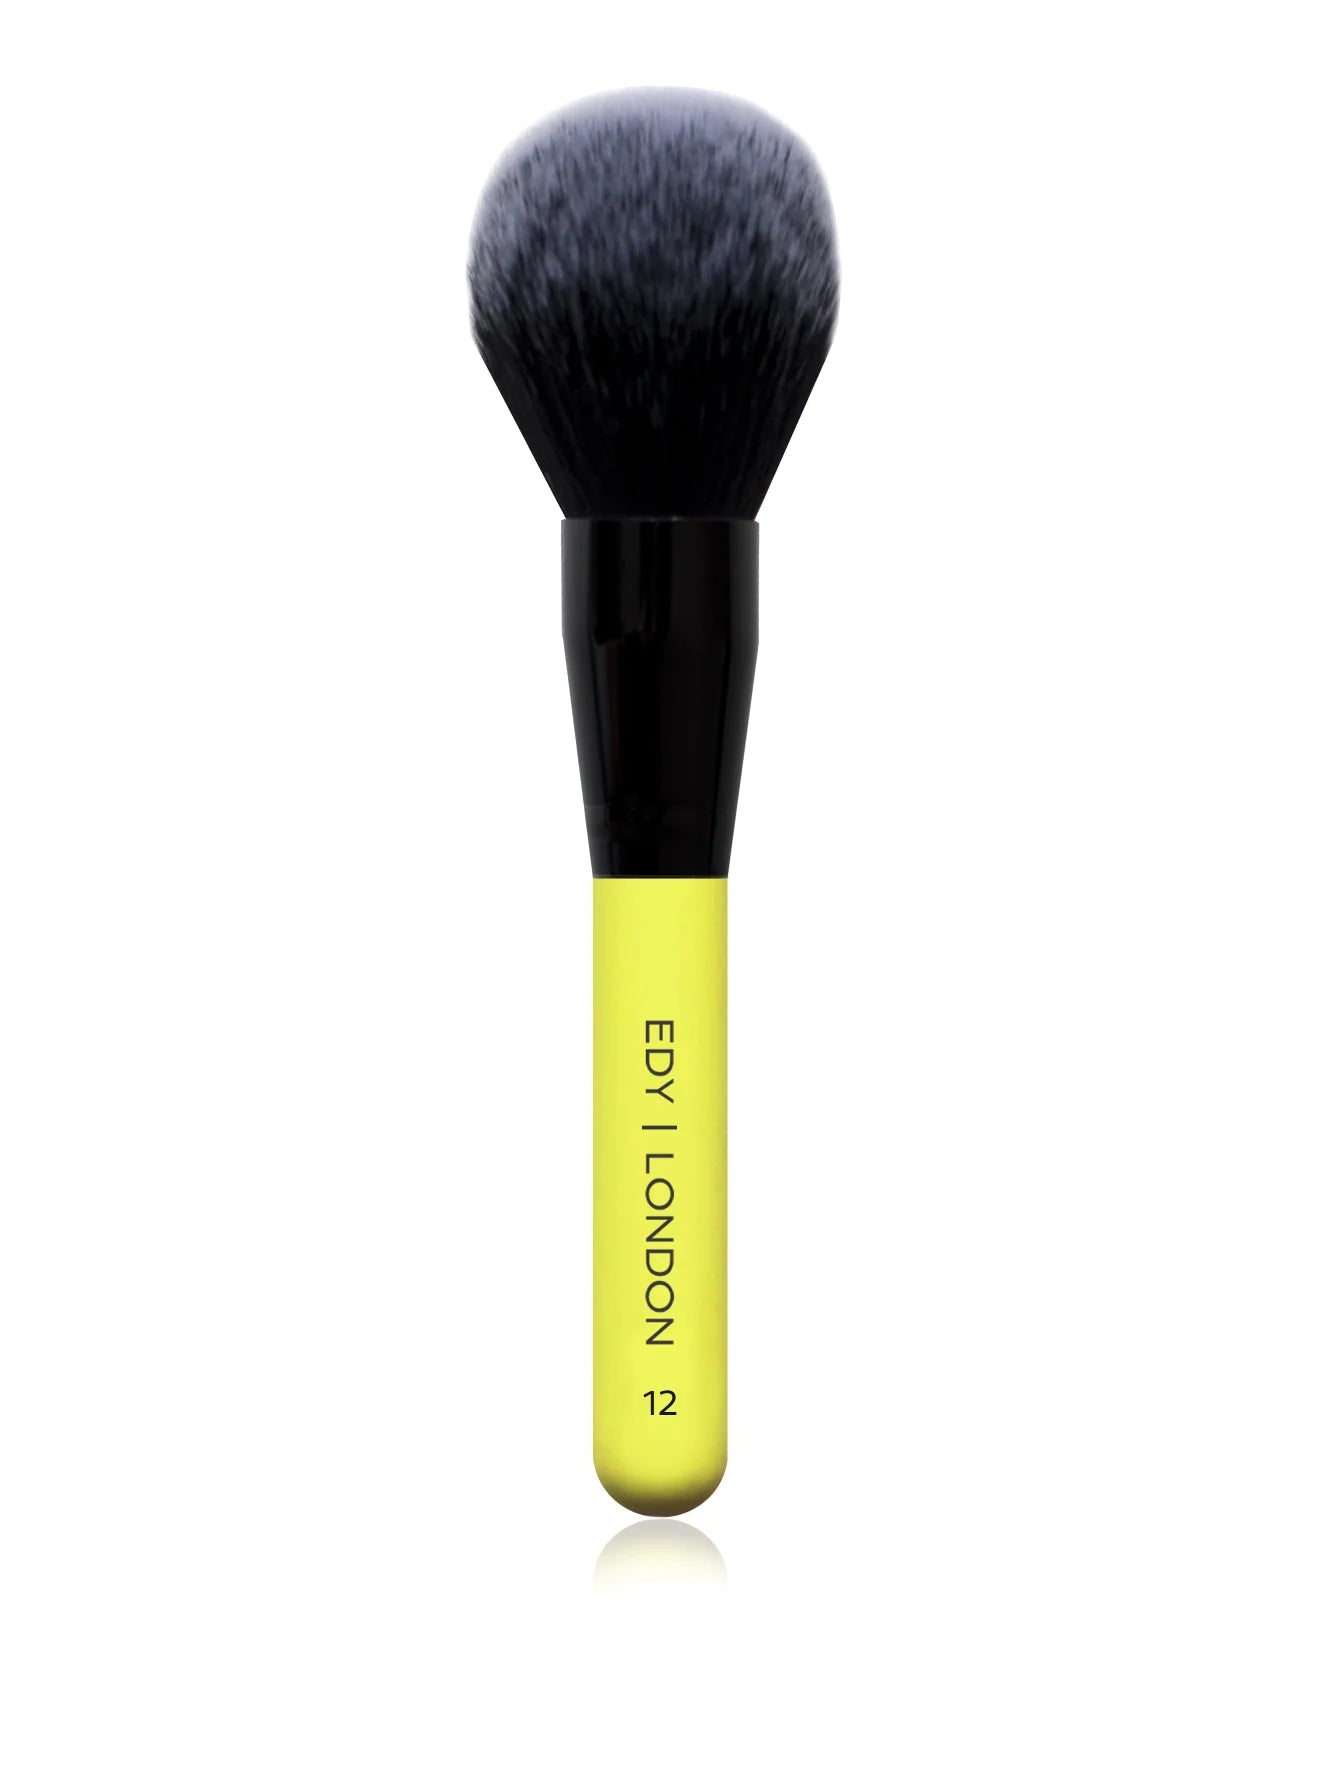 Powder Brush 12 Make-up Brush EDY LONDON Lemon   - EDY LONDON PRODUCTS UK - The Best Makeup Brushes - shop.edy.london